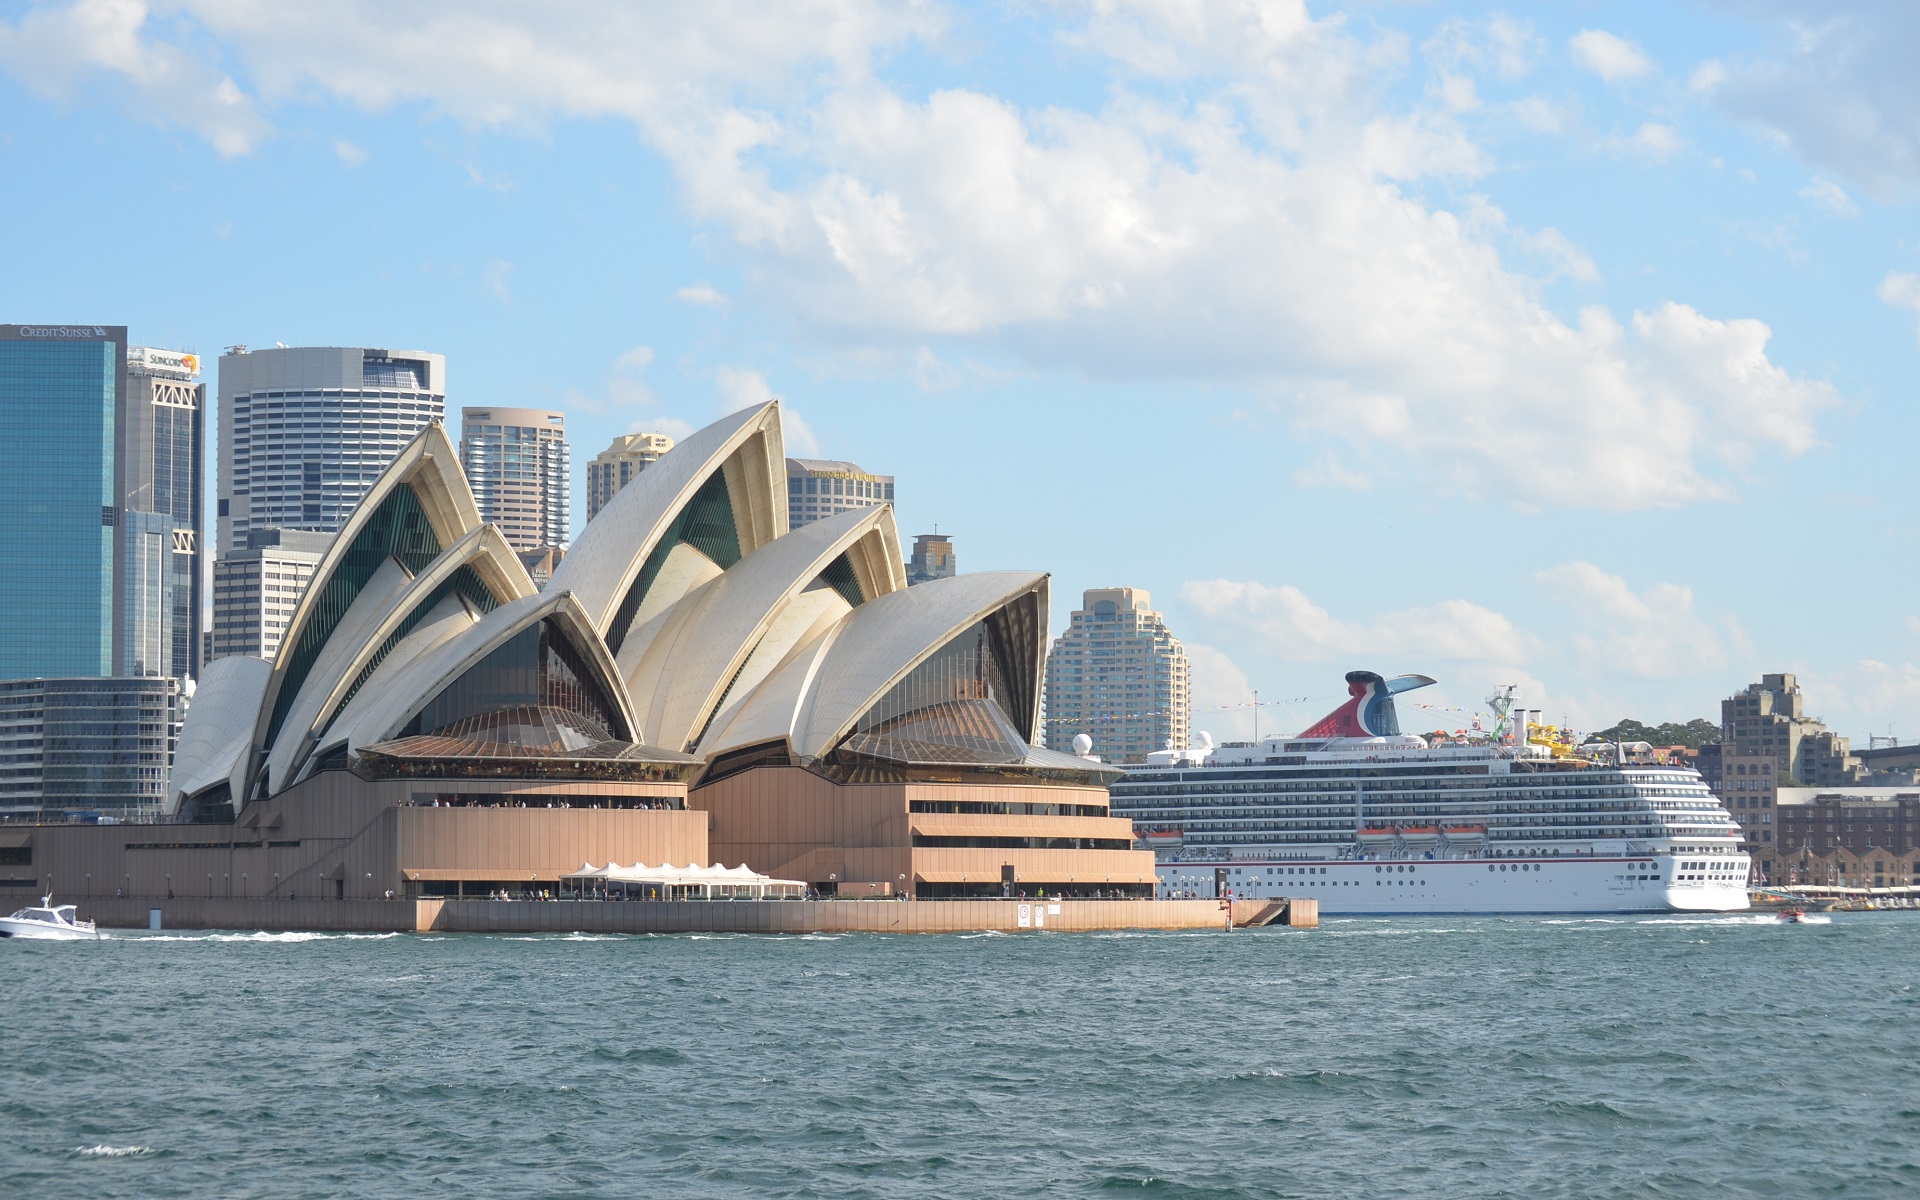 australia, sydney, cruise ship, man made, sydney opera house, carnival spirit, city